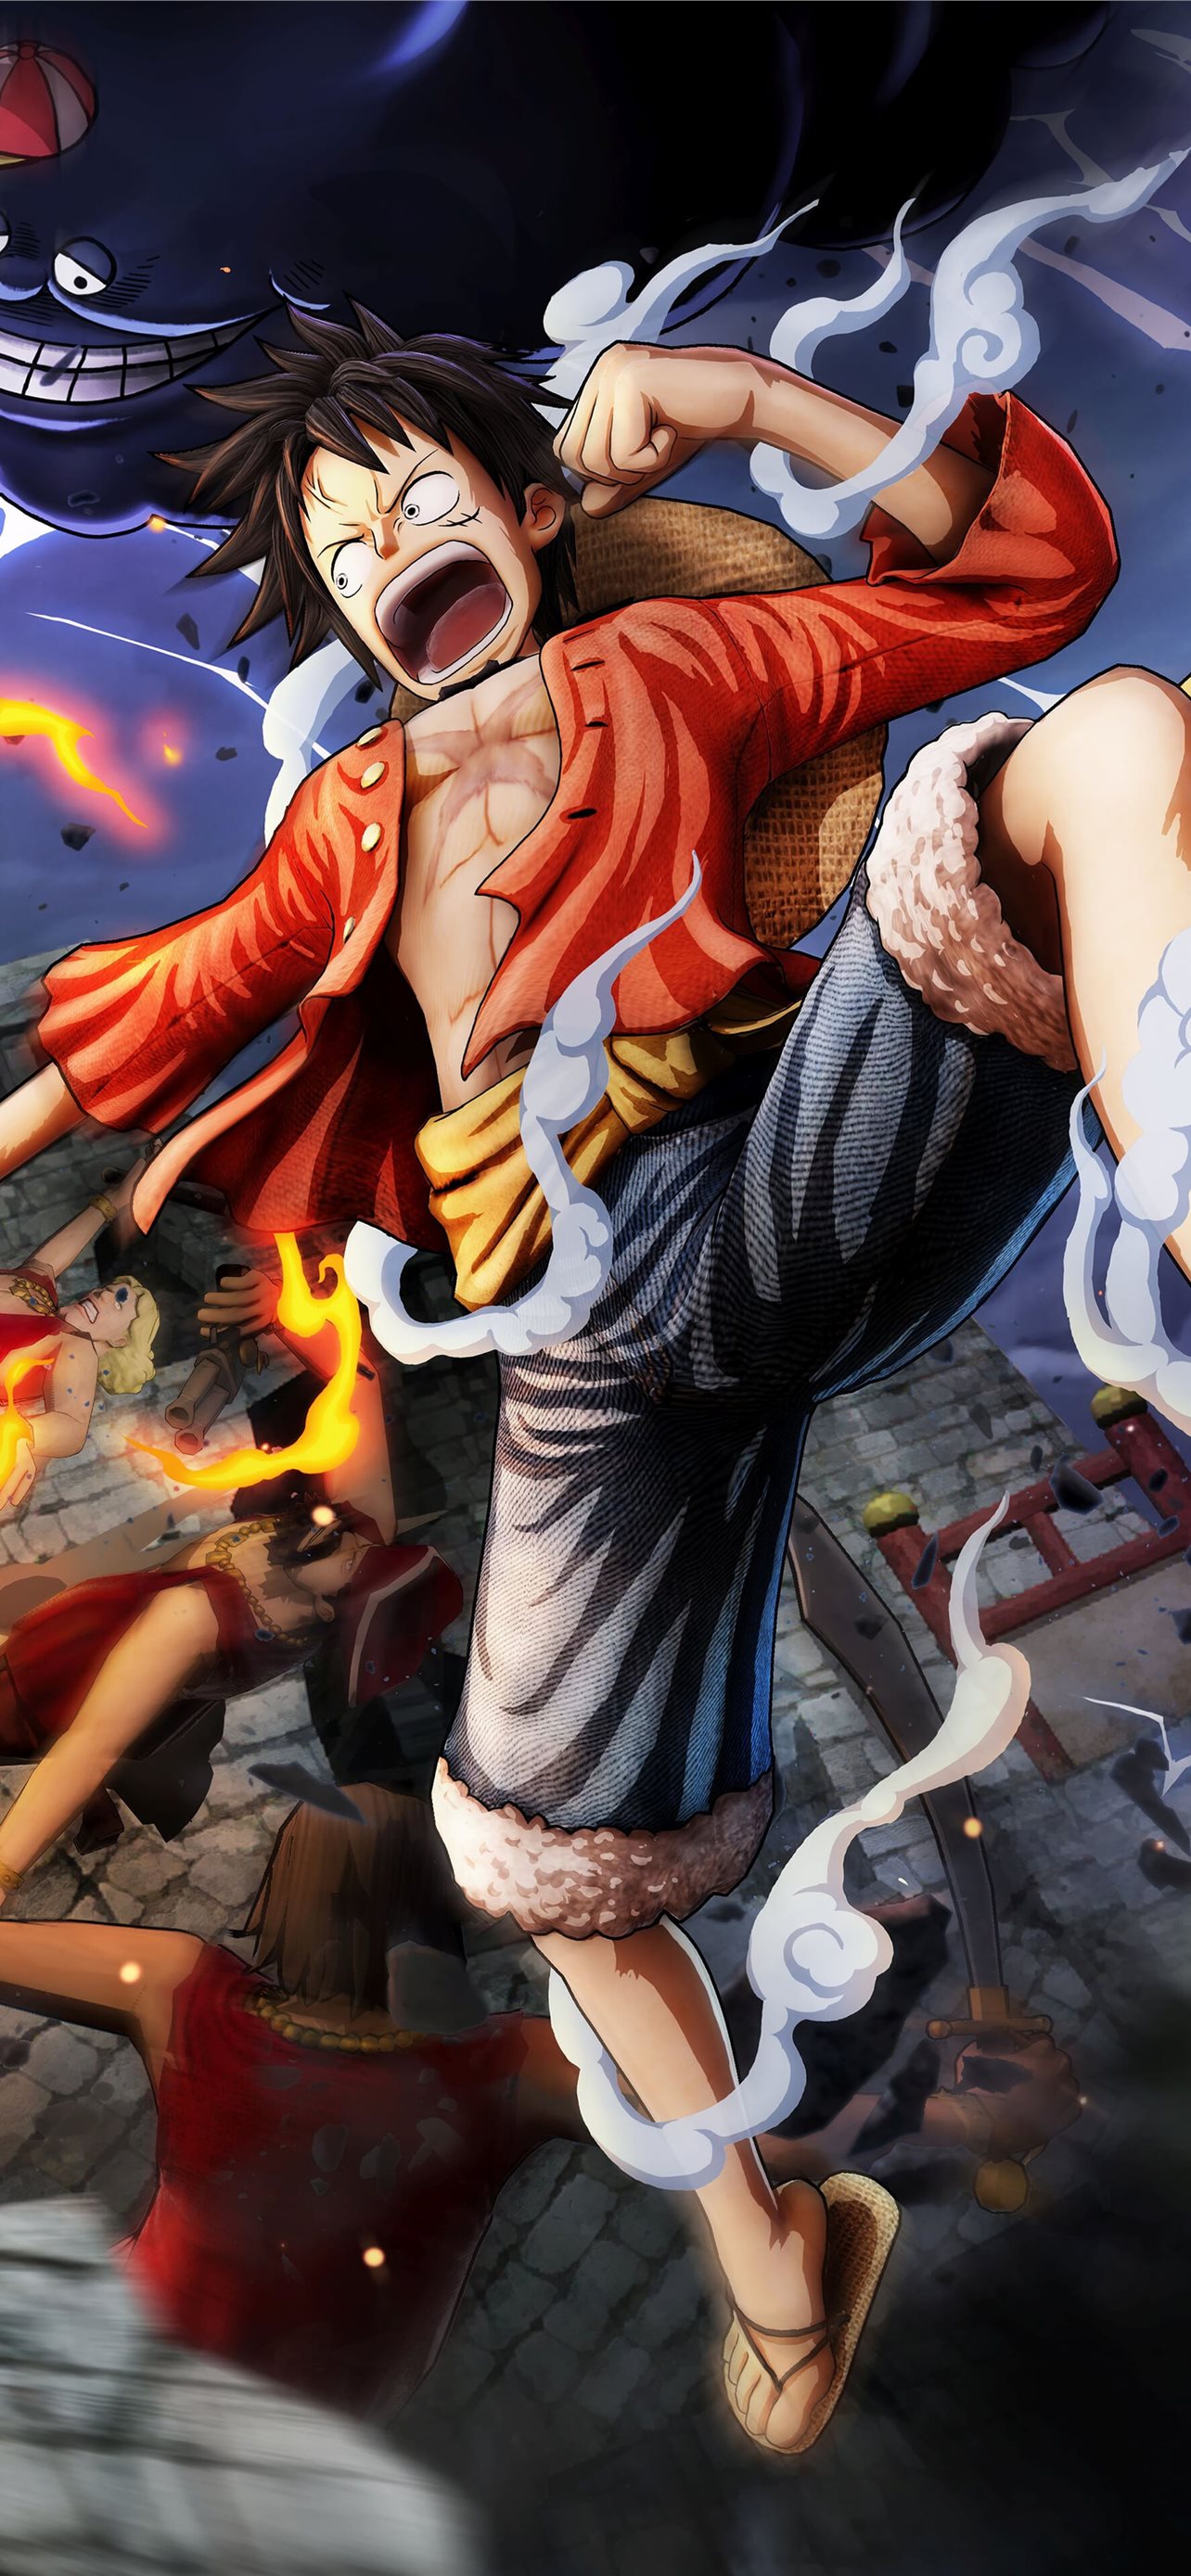 Anime One Piece KoLPaPer Awesome Free